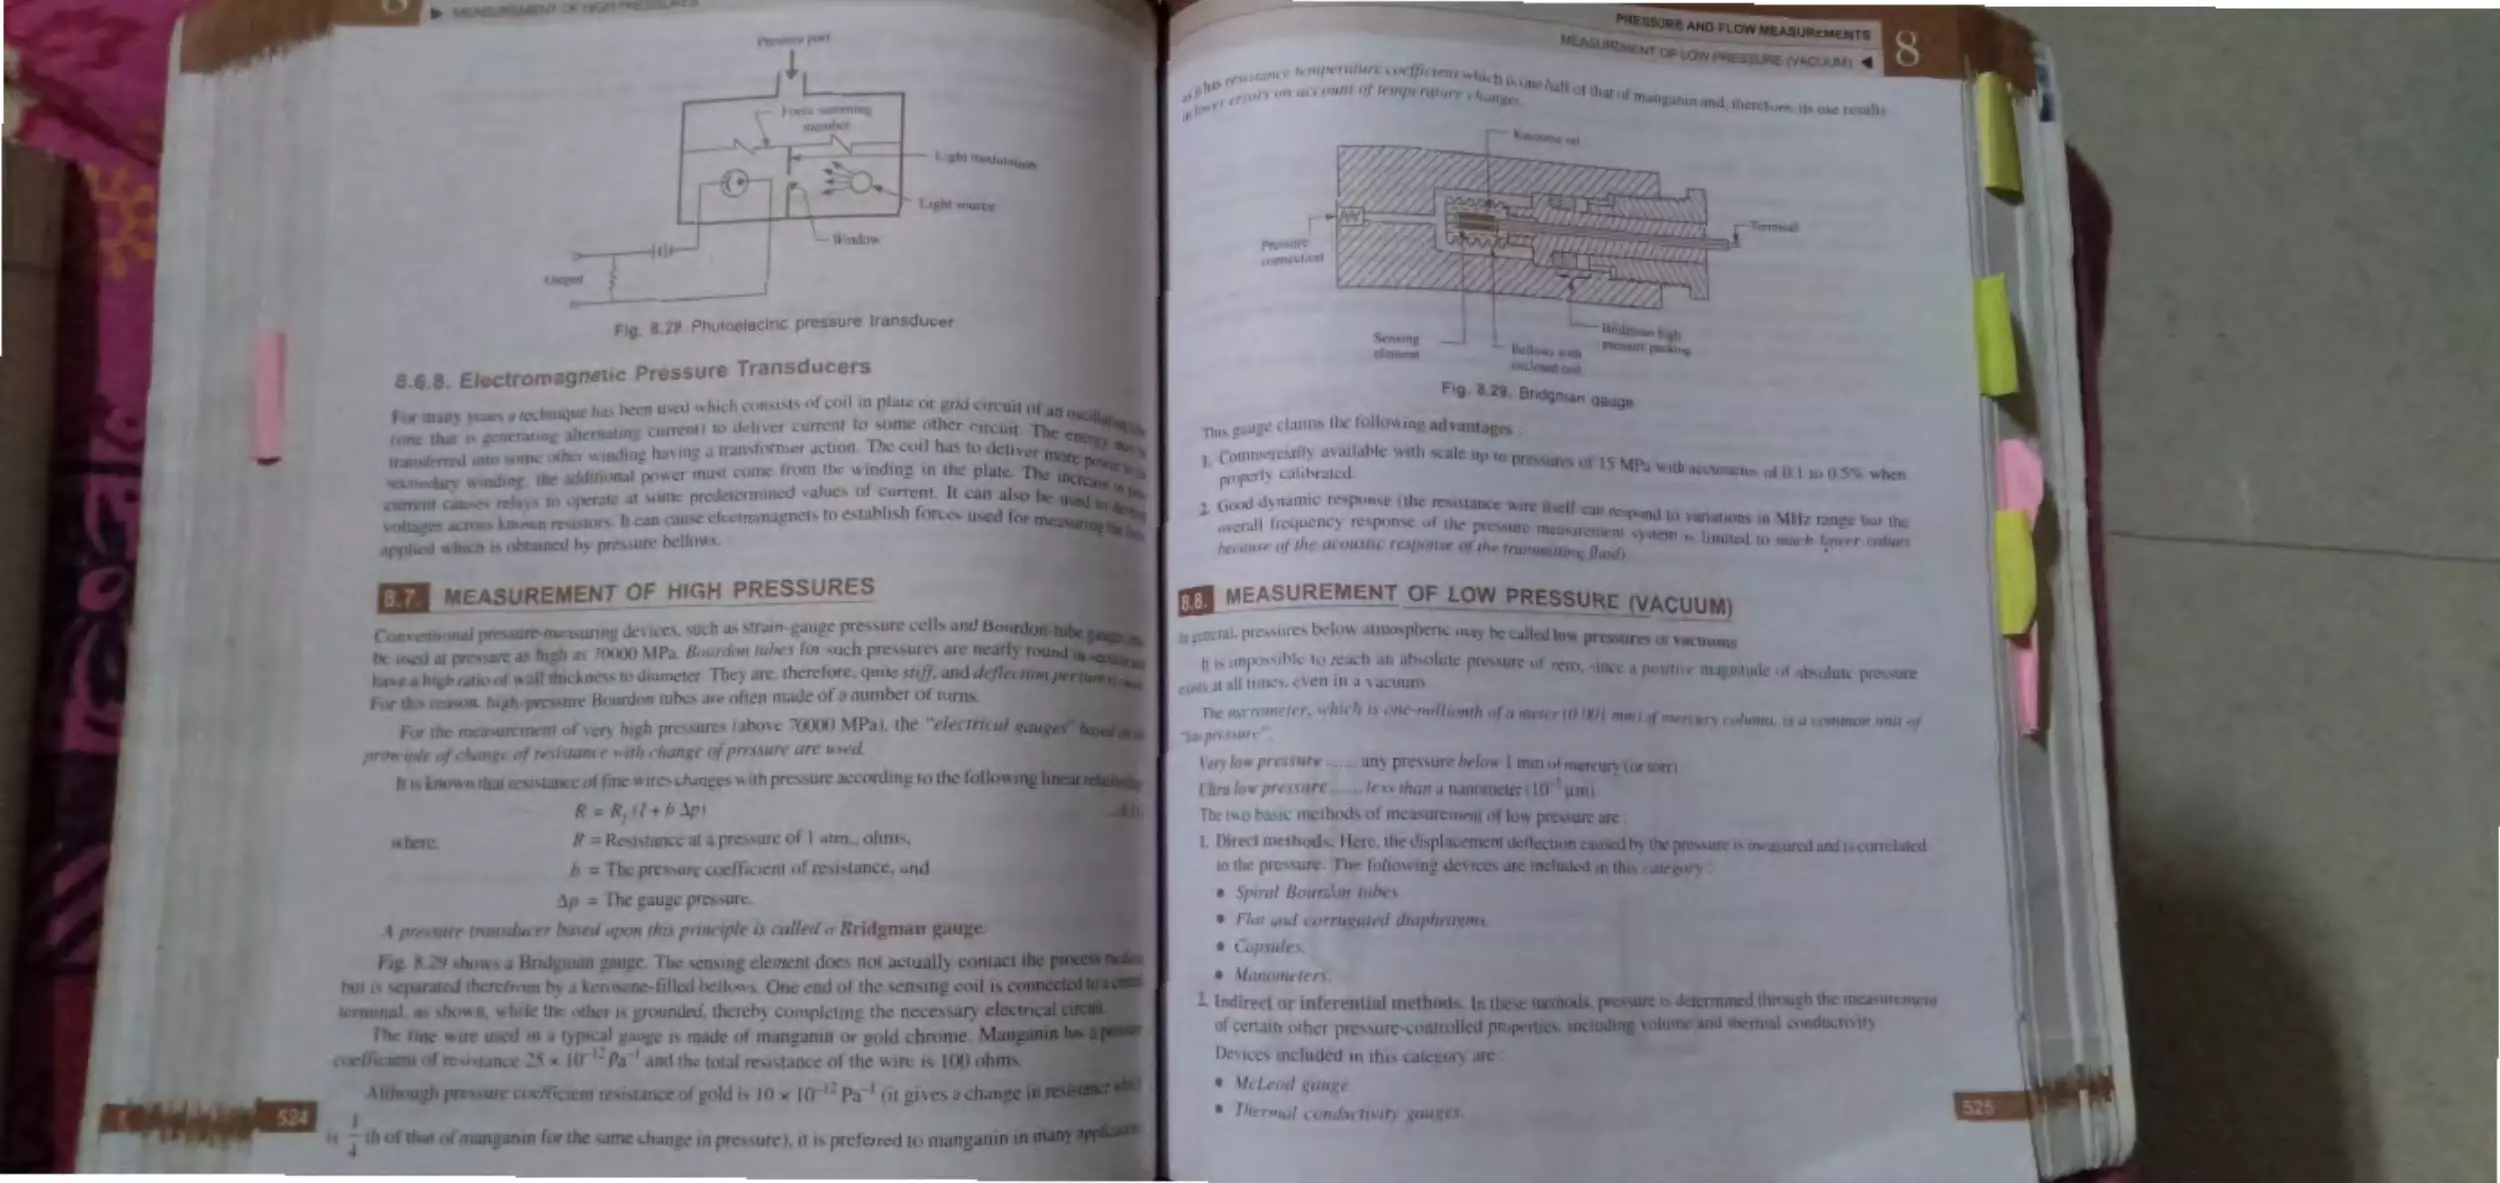 8.6.8. Electroctromagnetic Pressure Transducers
8.7. Measurement of High Pressures